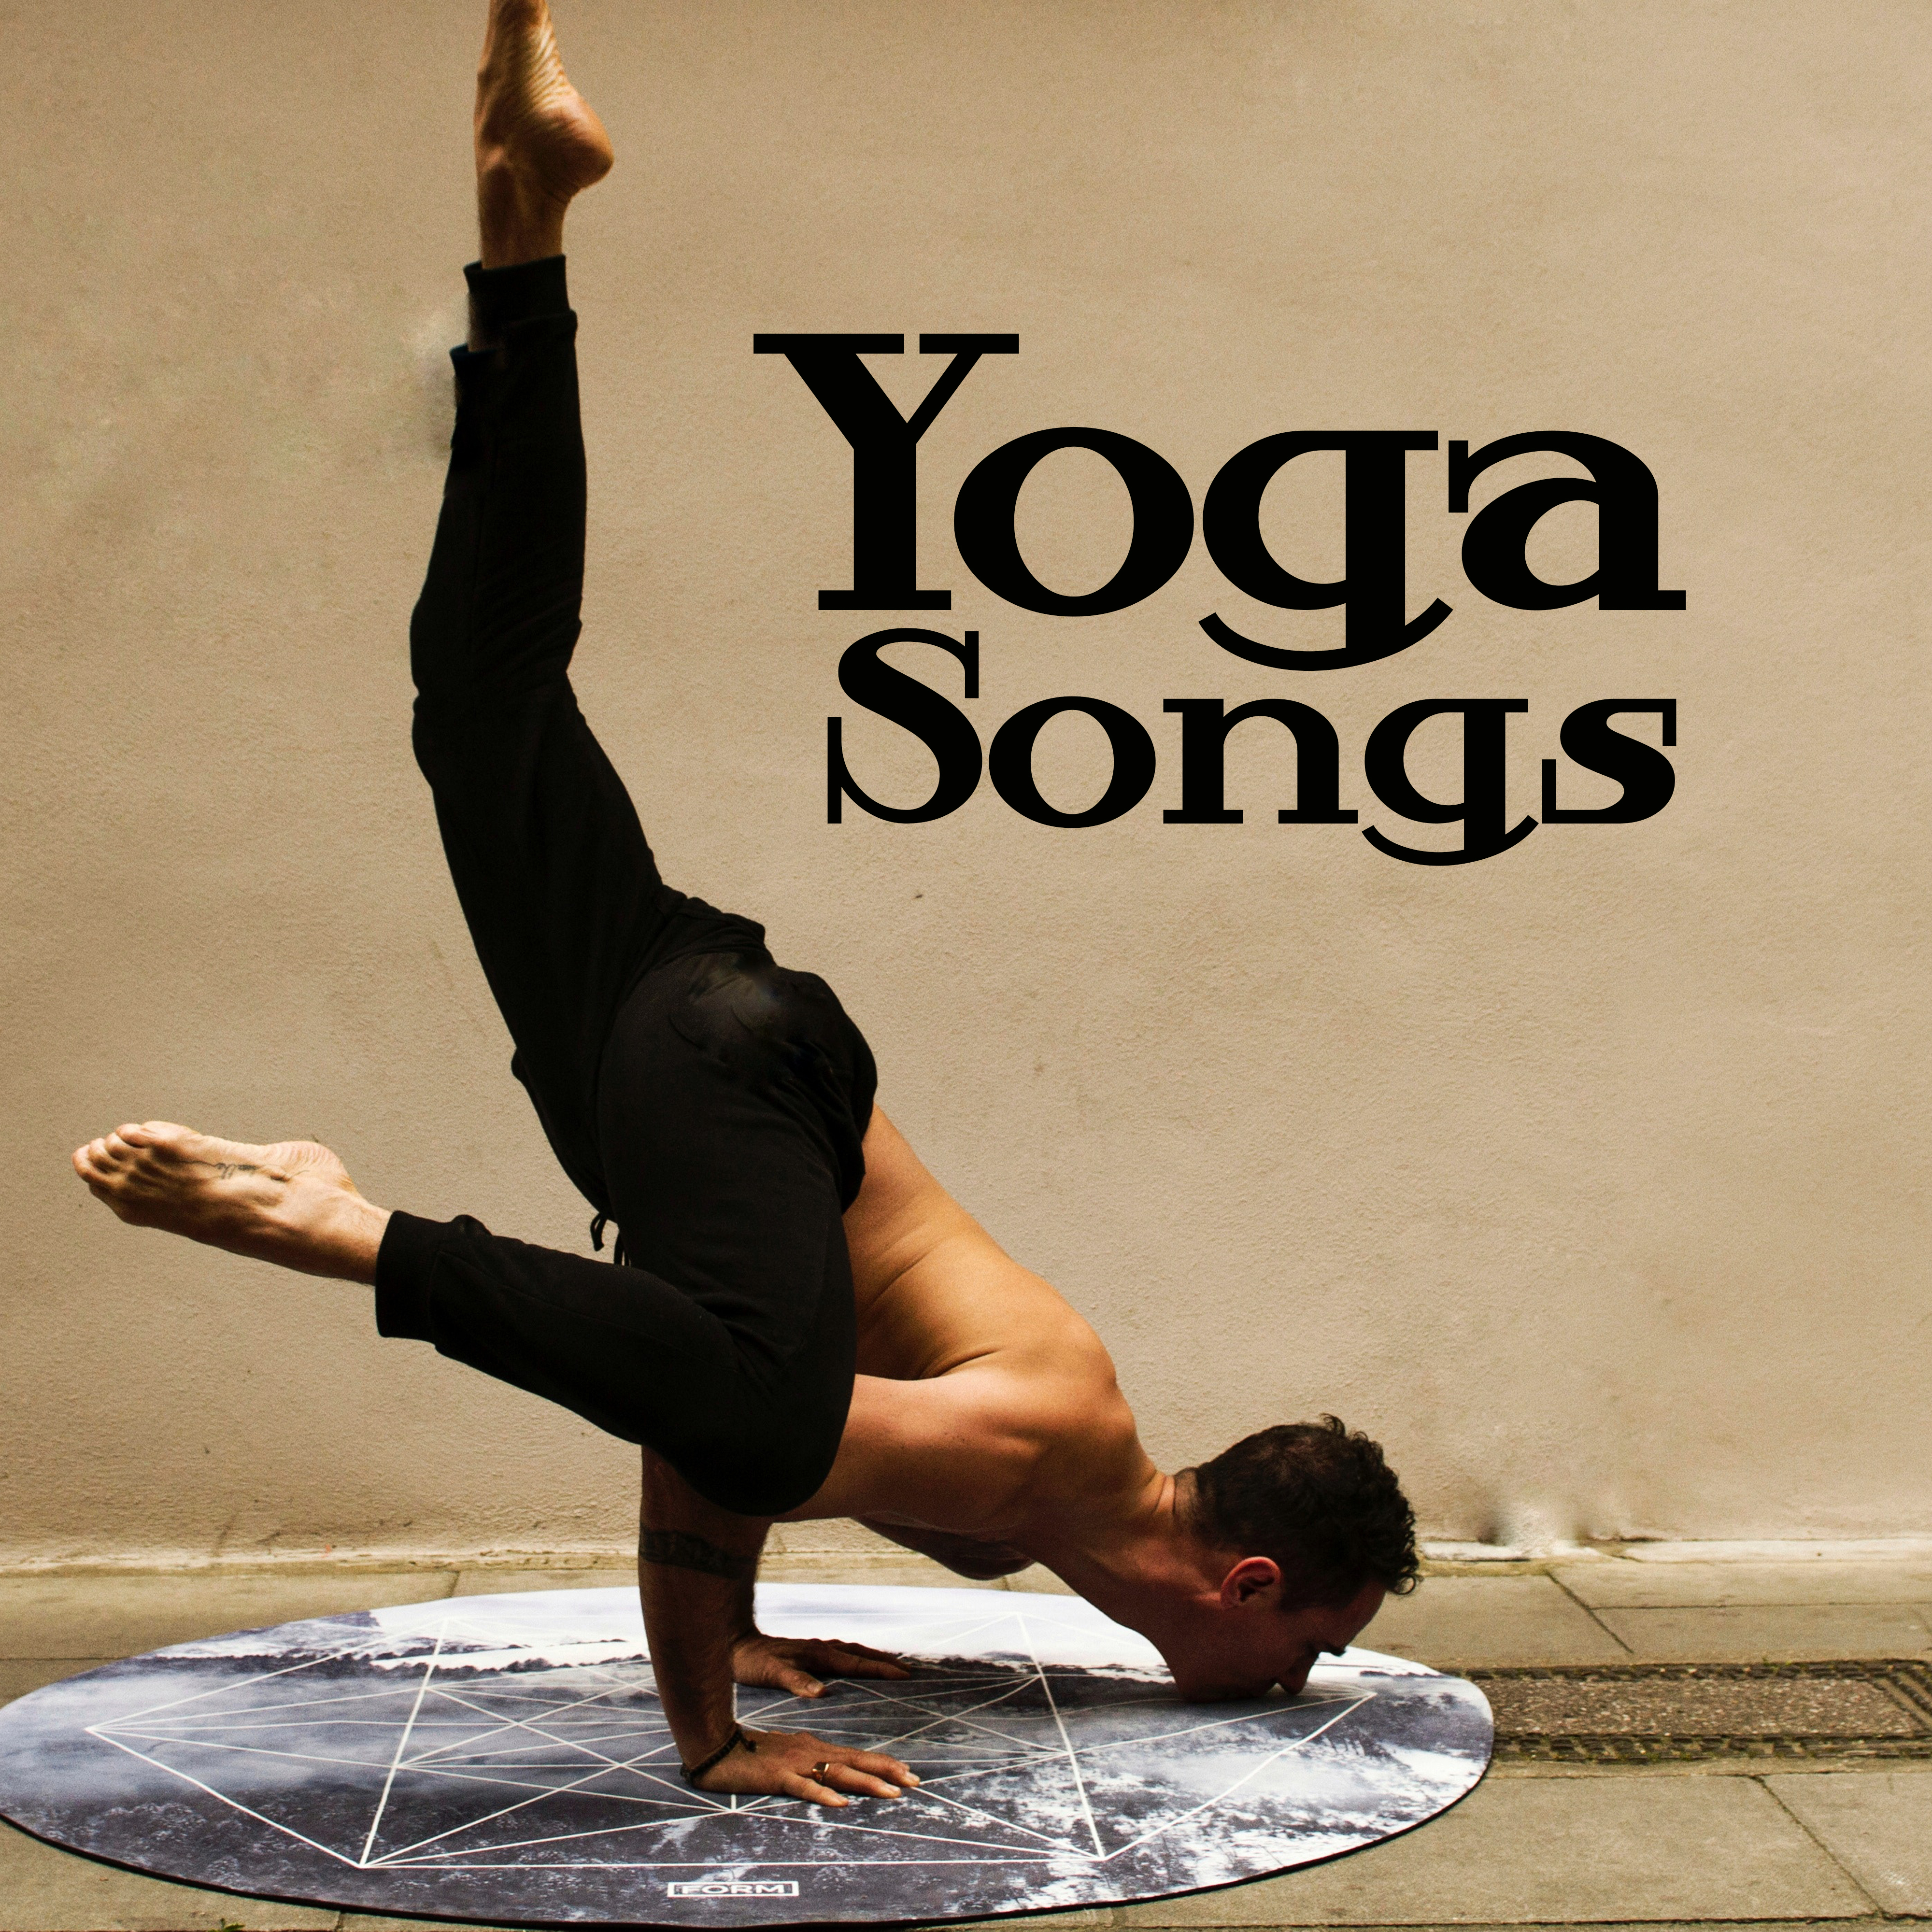 Yoga Songs  French Songs, Yoga Practice, Meditation Music, Zen Relaxation